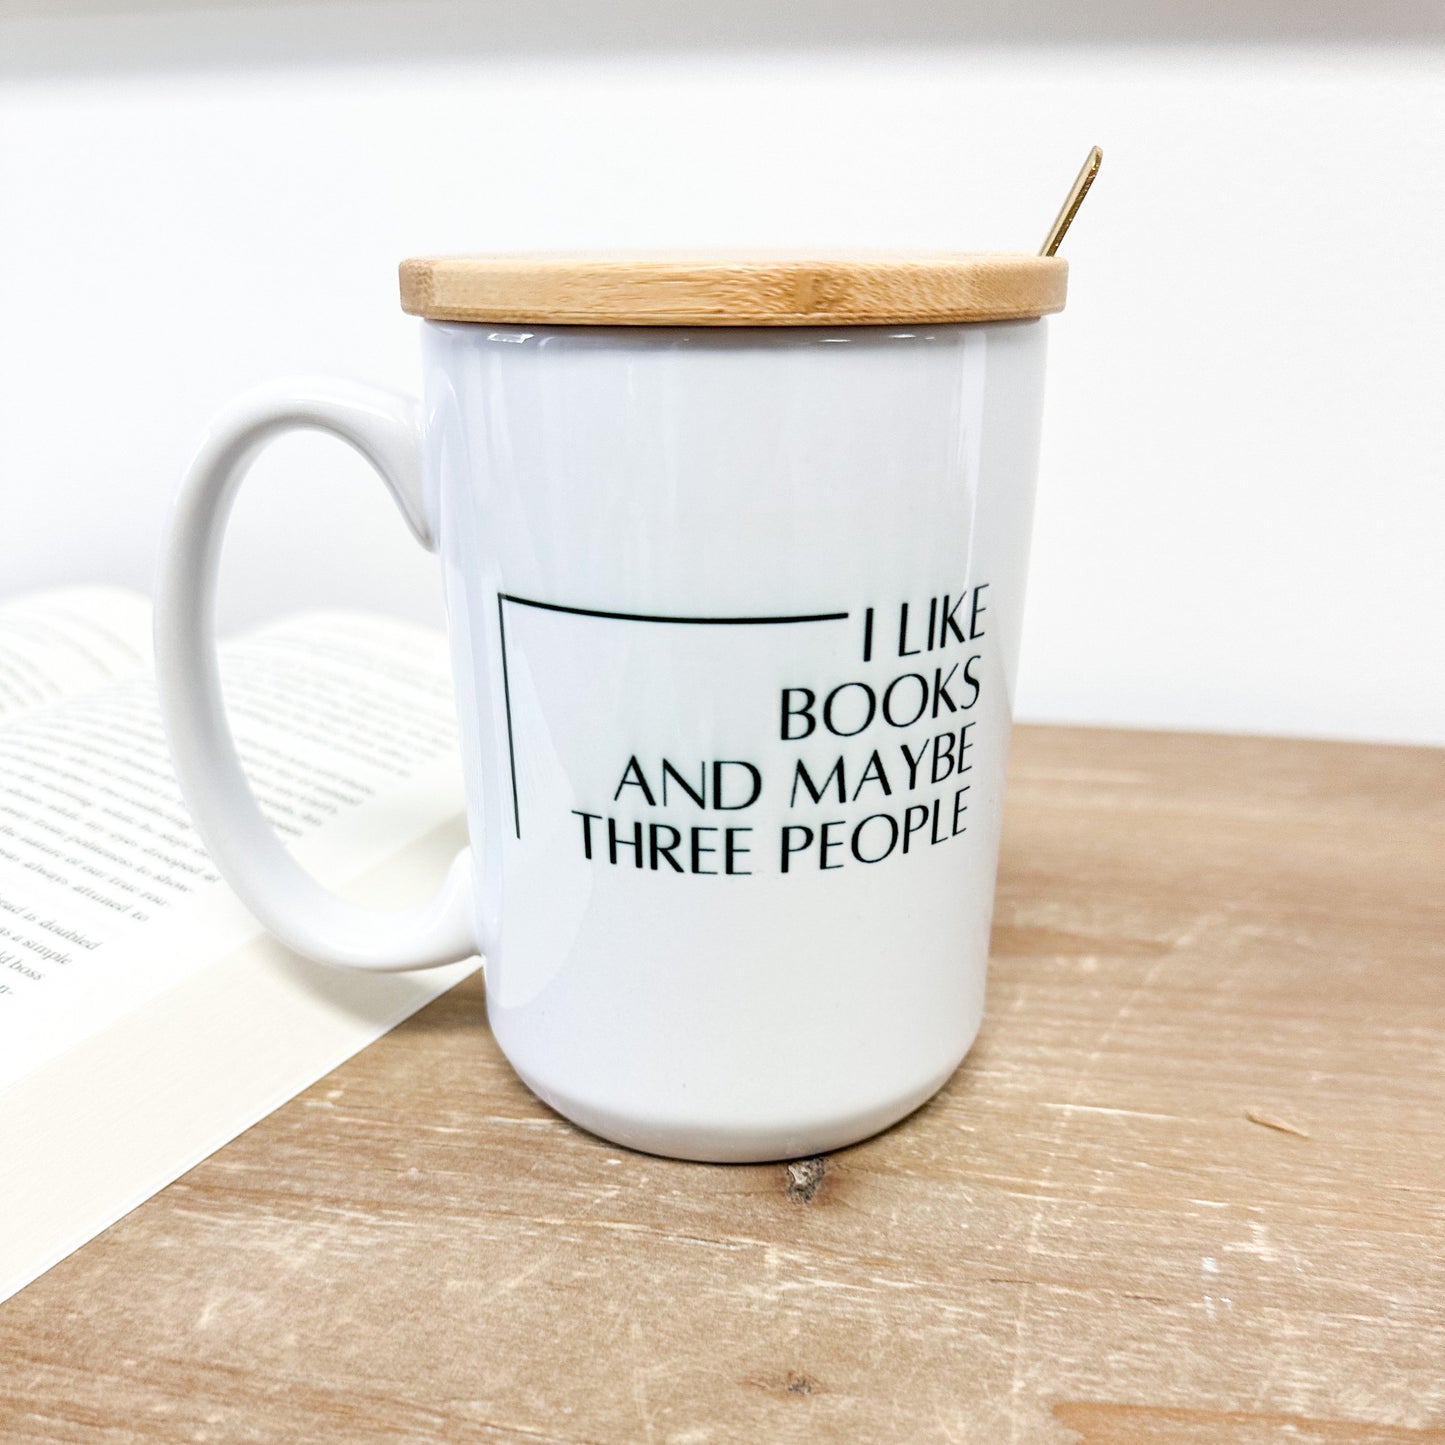 I Like Books and Maybe Three People, Funny Mug, Coffee Mug Book Lover Gift